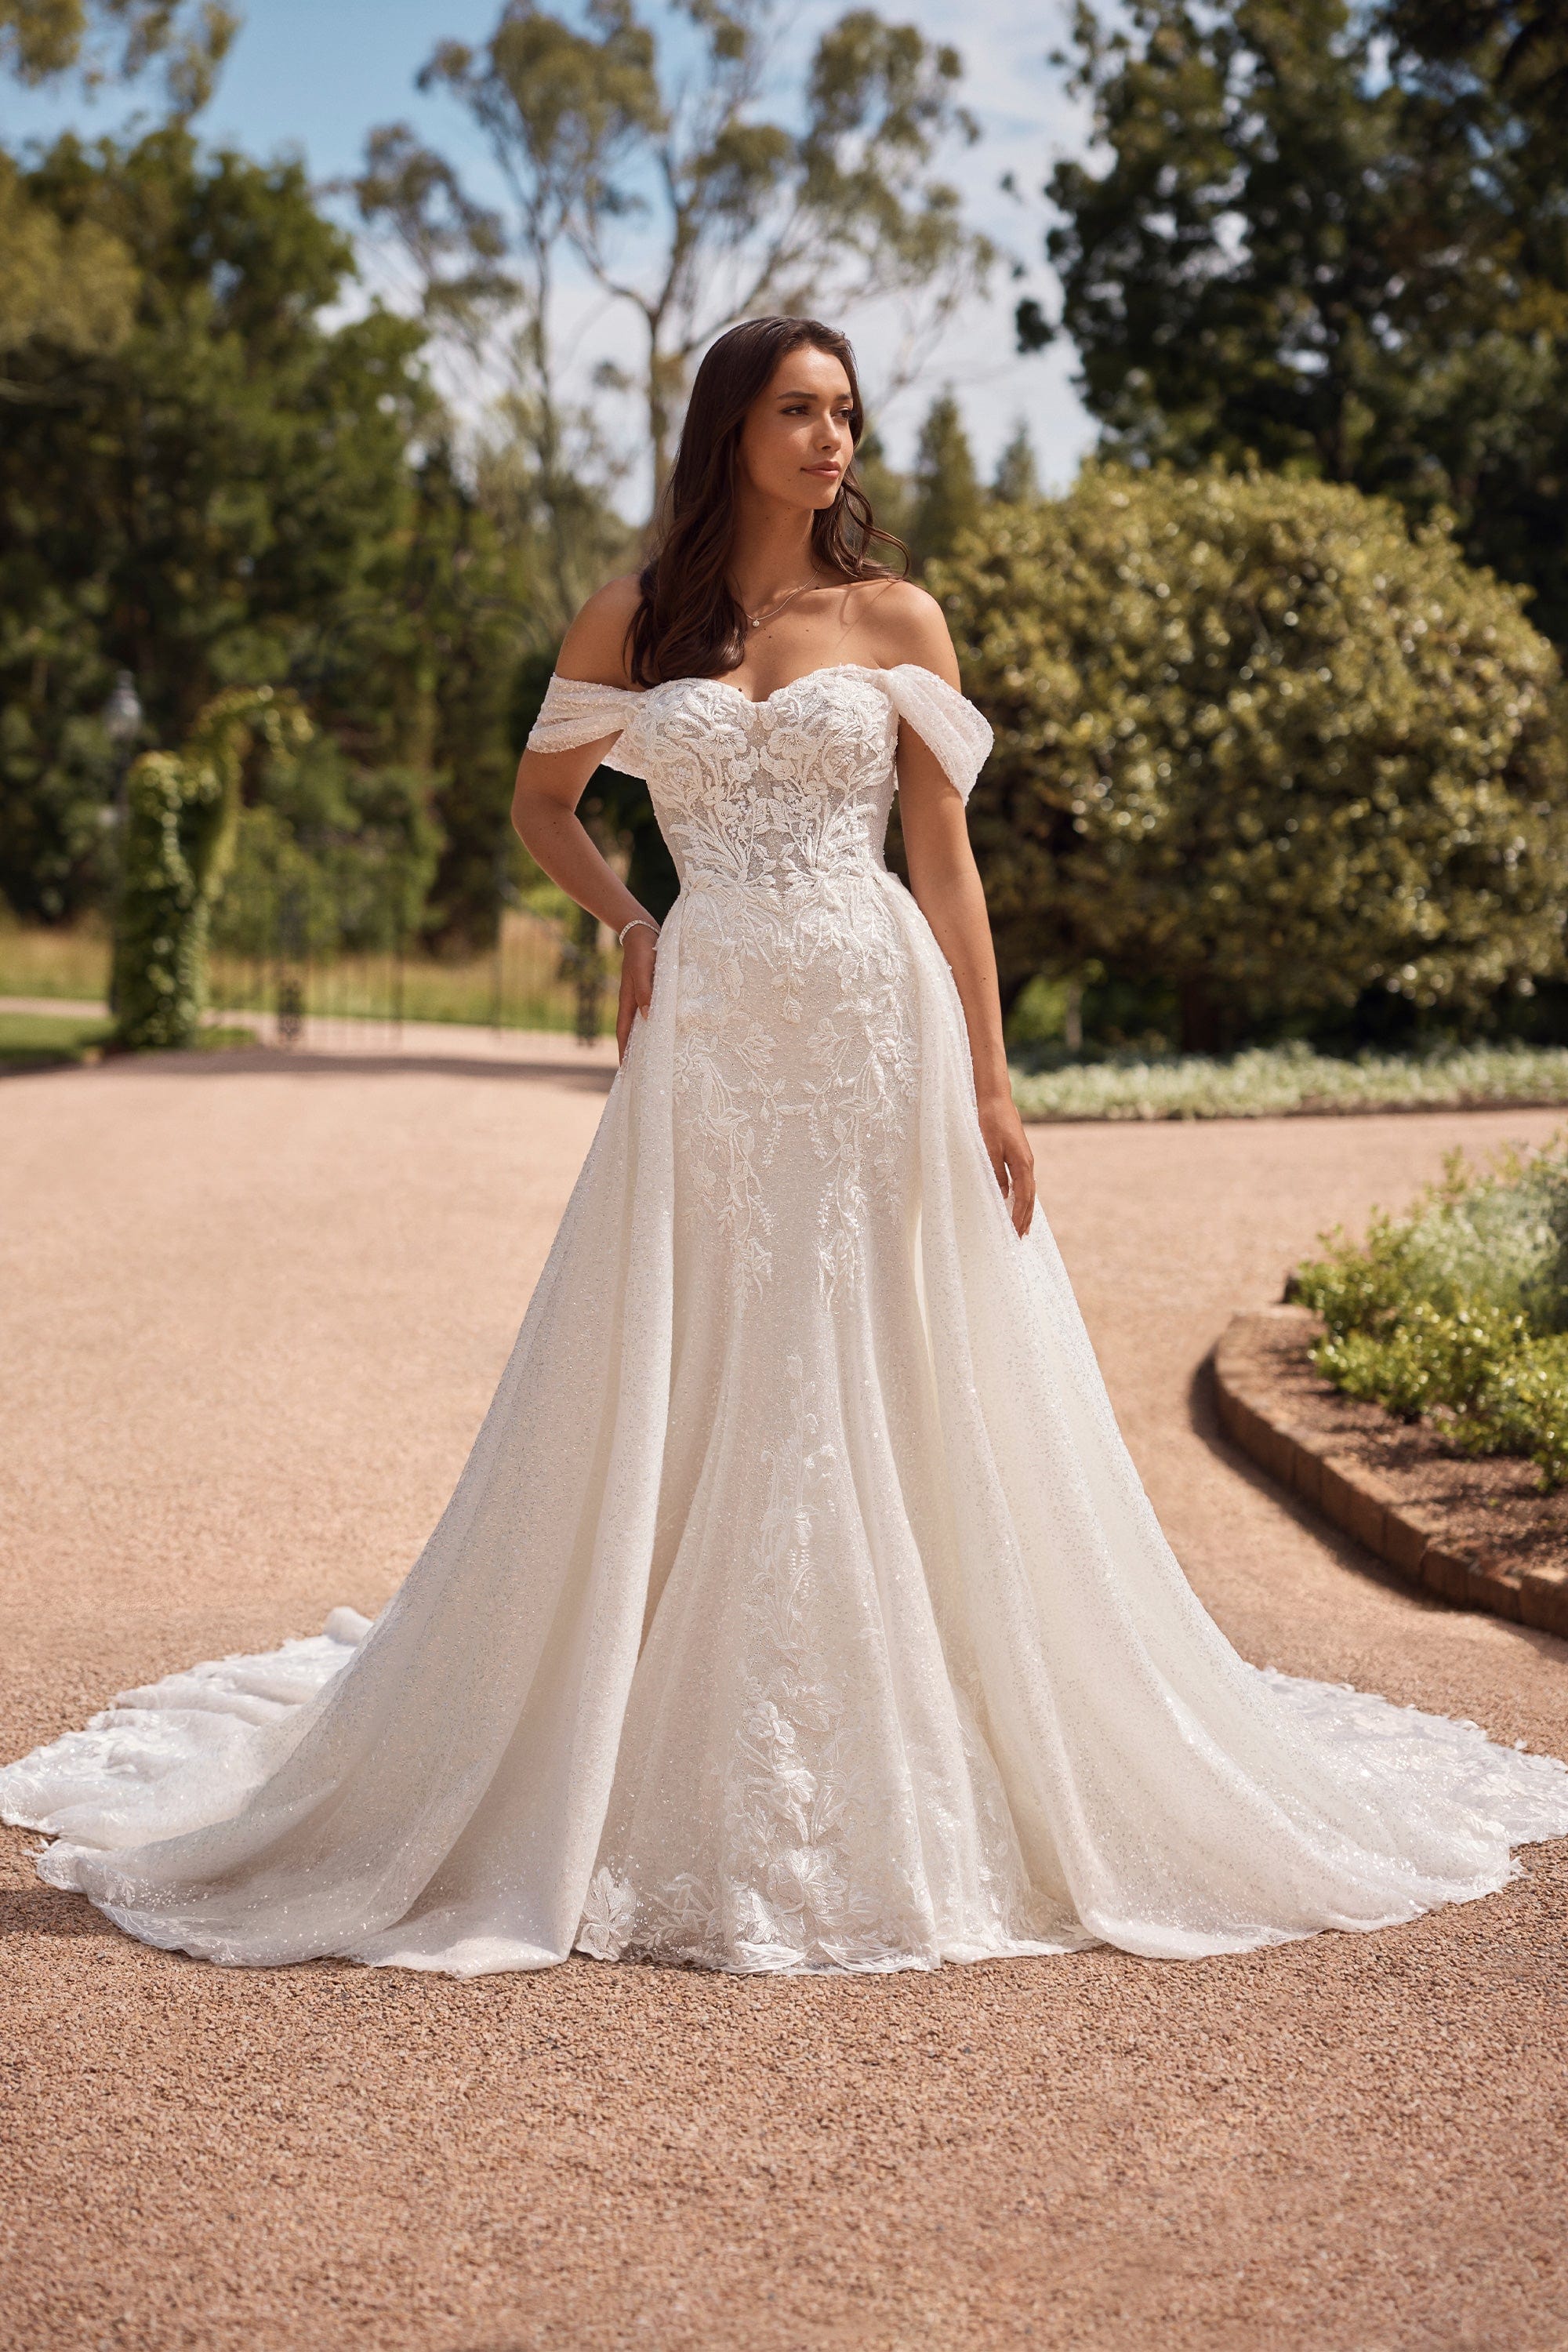 TURMALIN, A-line wedding dress